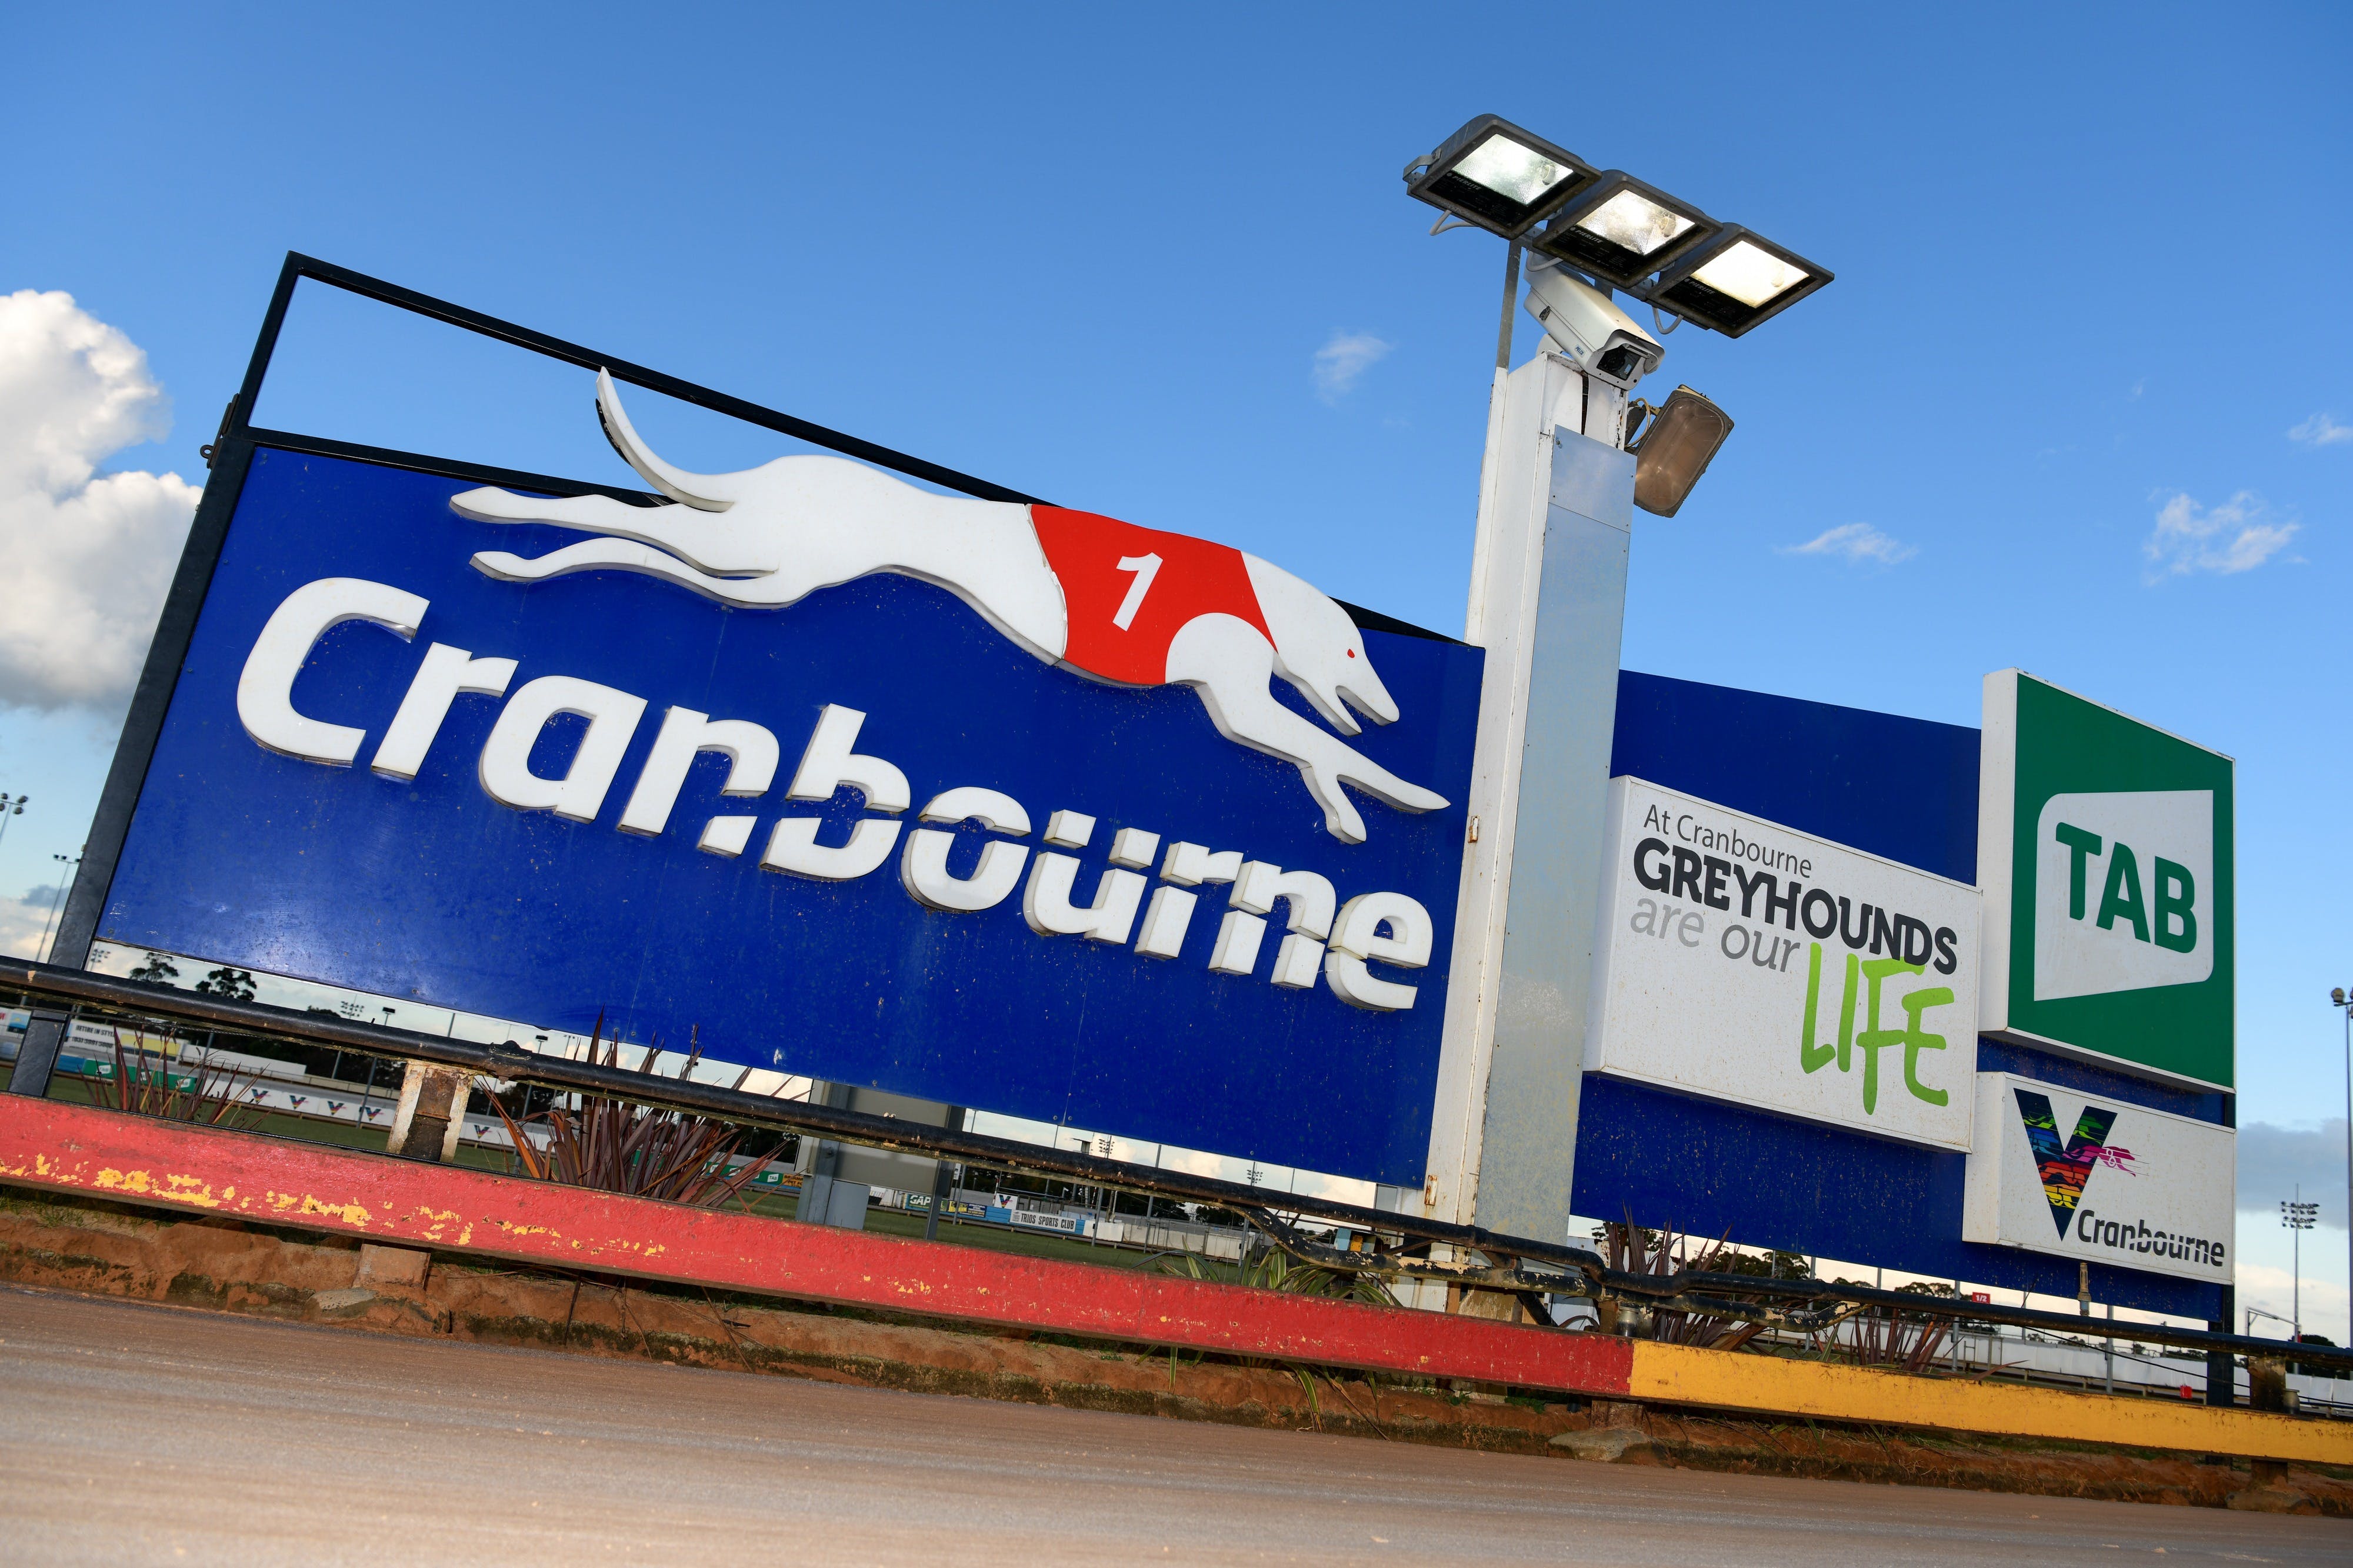 Cranbourne Greyhound Racing Club - Nambucca Heads Accommodation